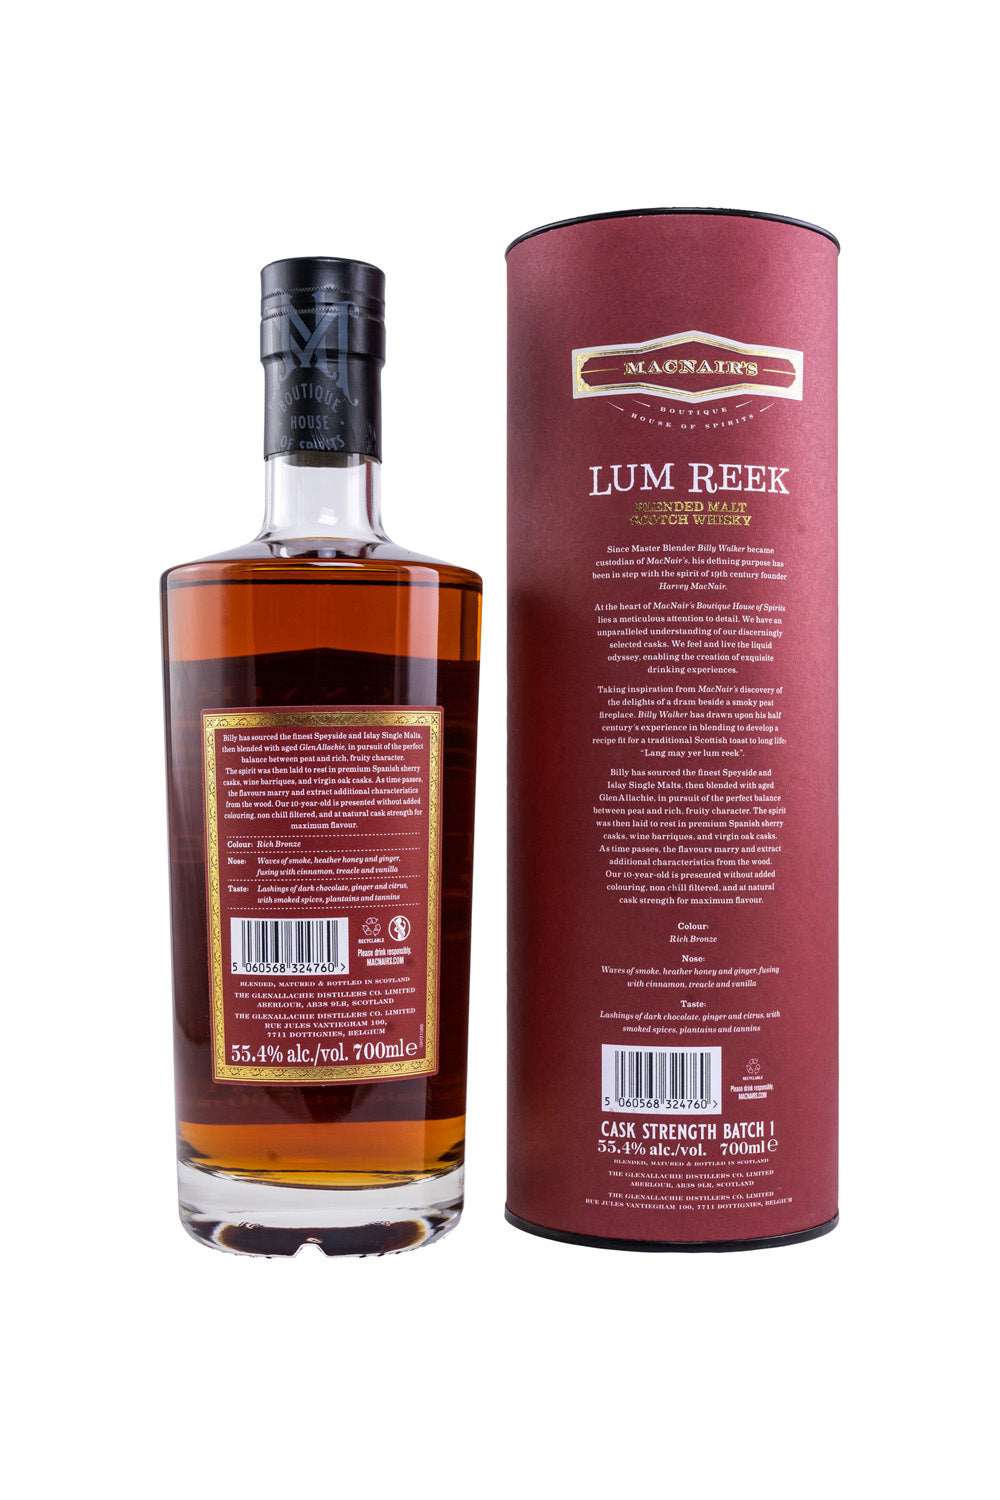 MacNair's Lum Reek 10 Jahre Cask Strength Batch 1 Blended Scotch Whisky 55,4% vol. 700ml - Maltimore